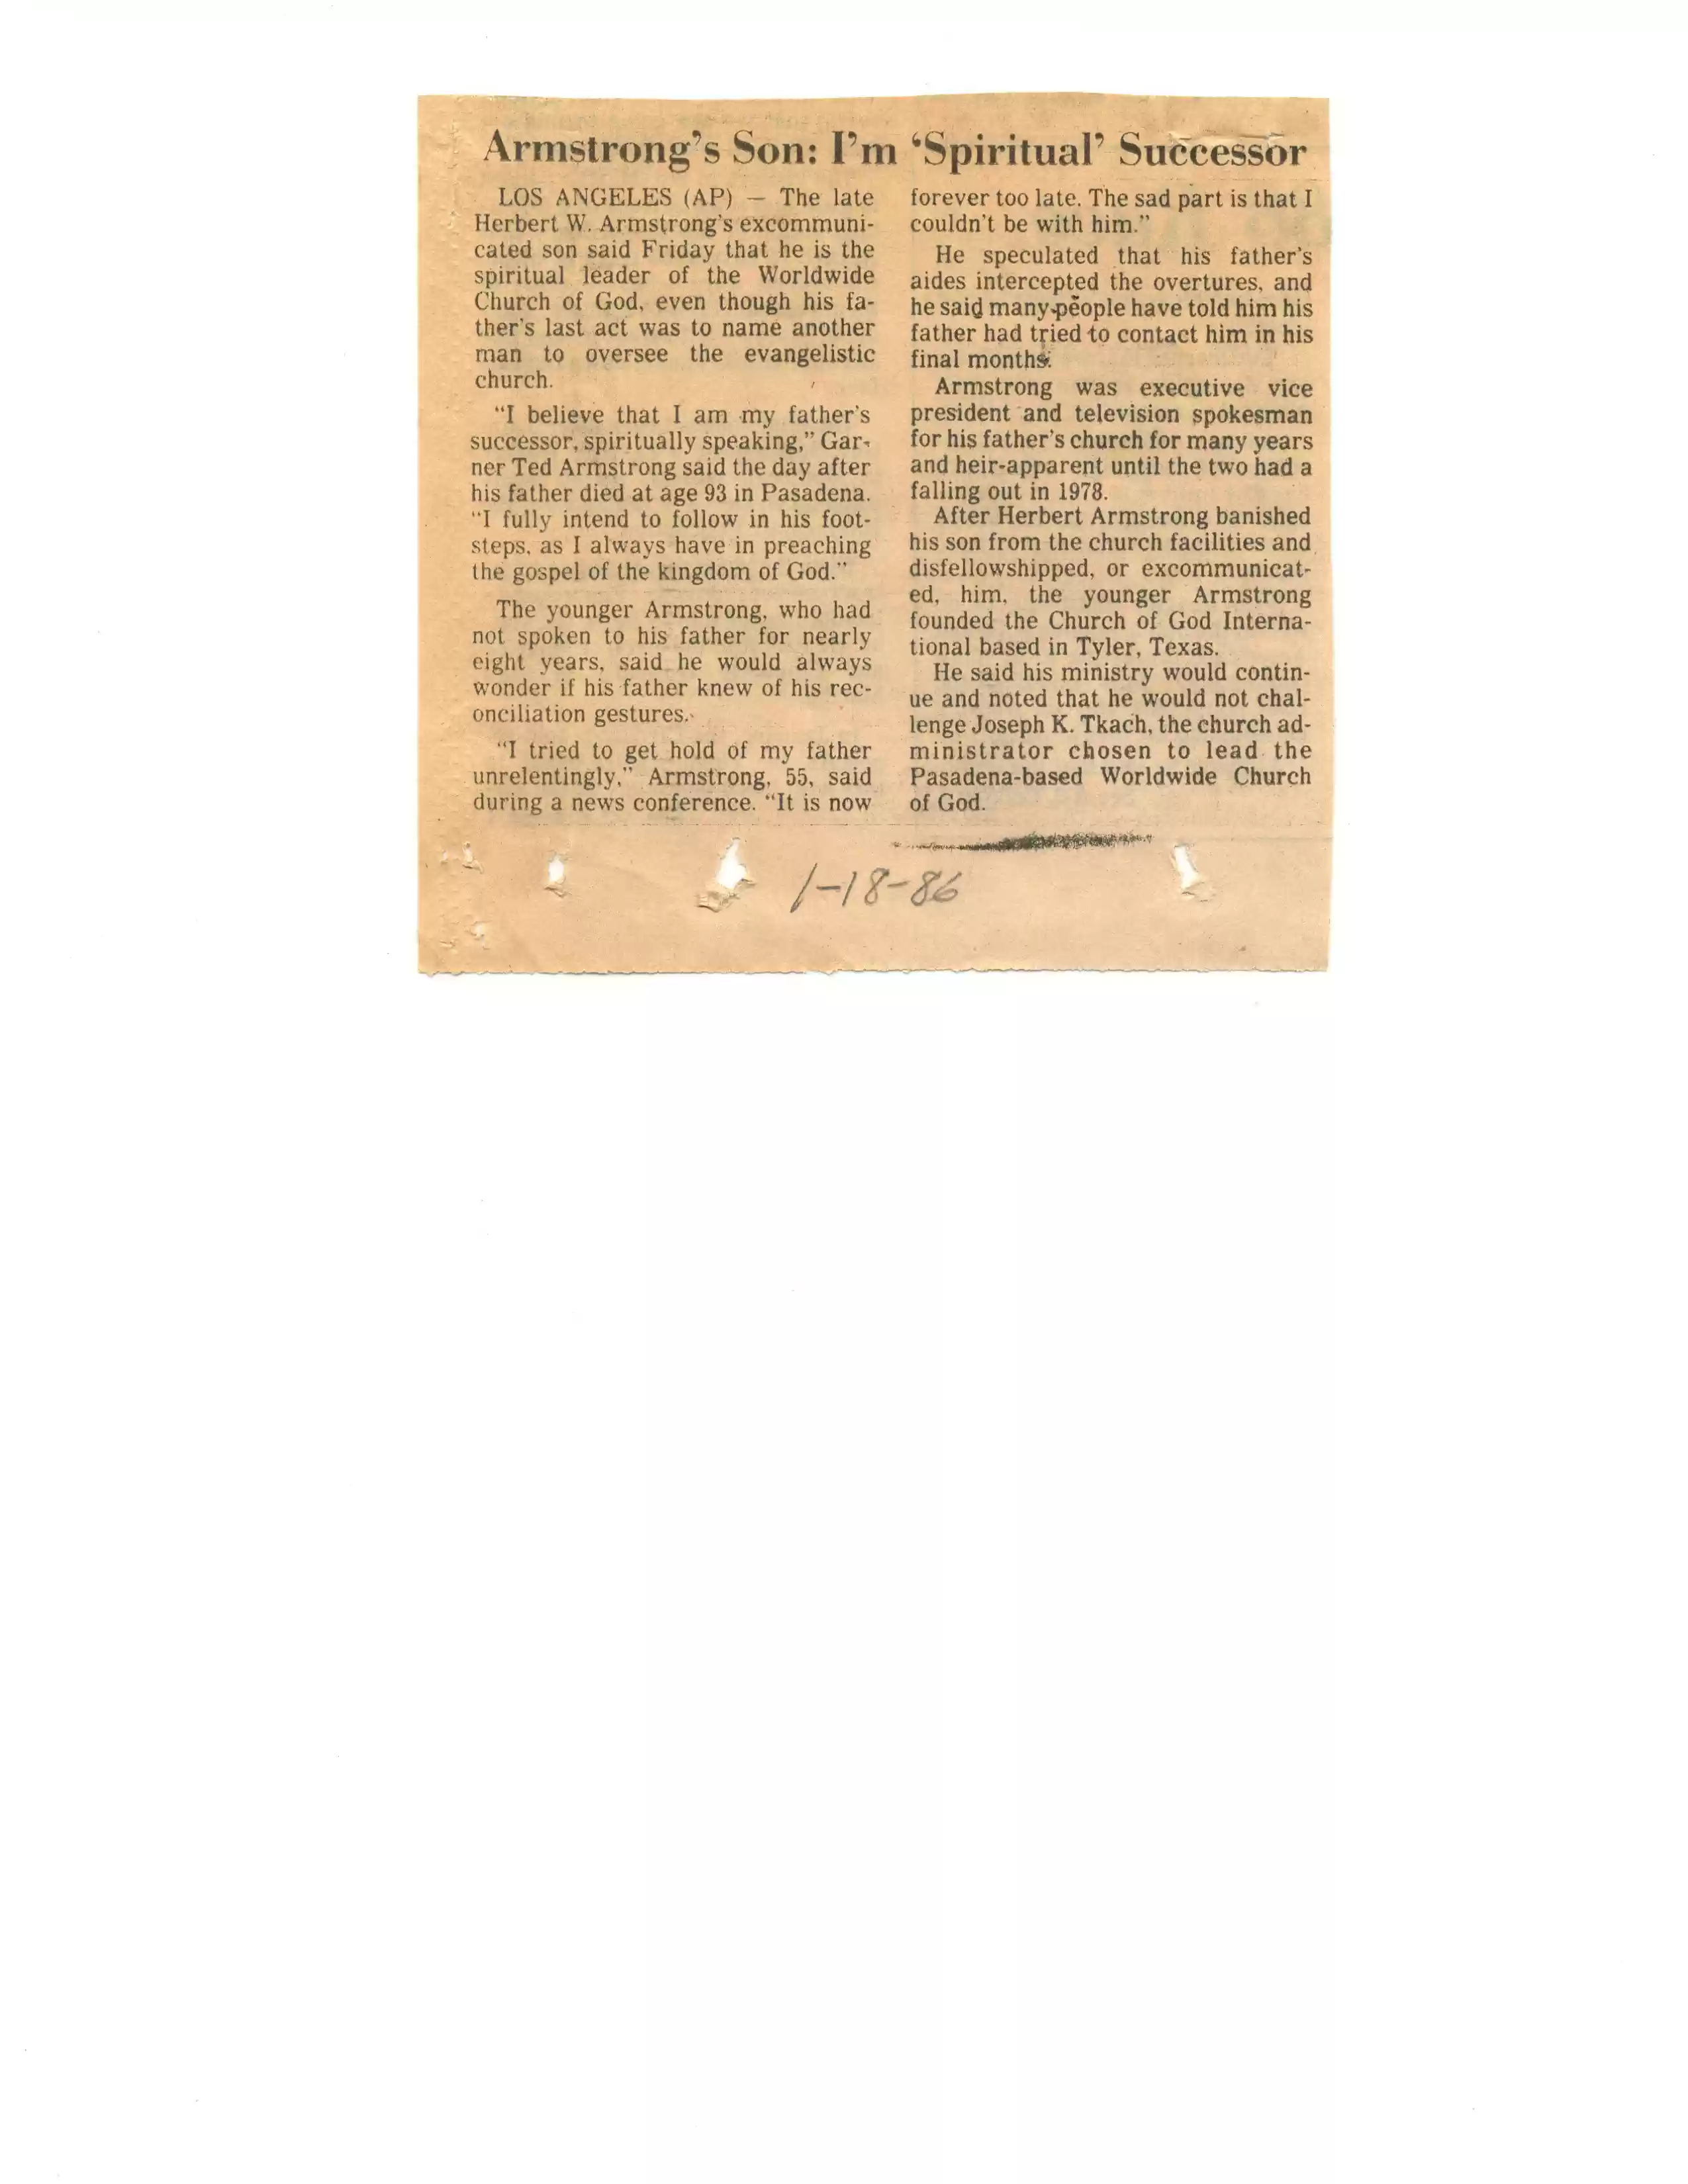 Salt Lake Tribune, 1-18-86